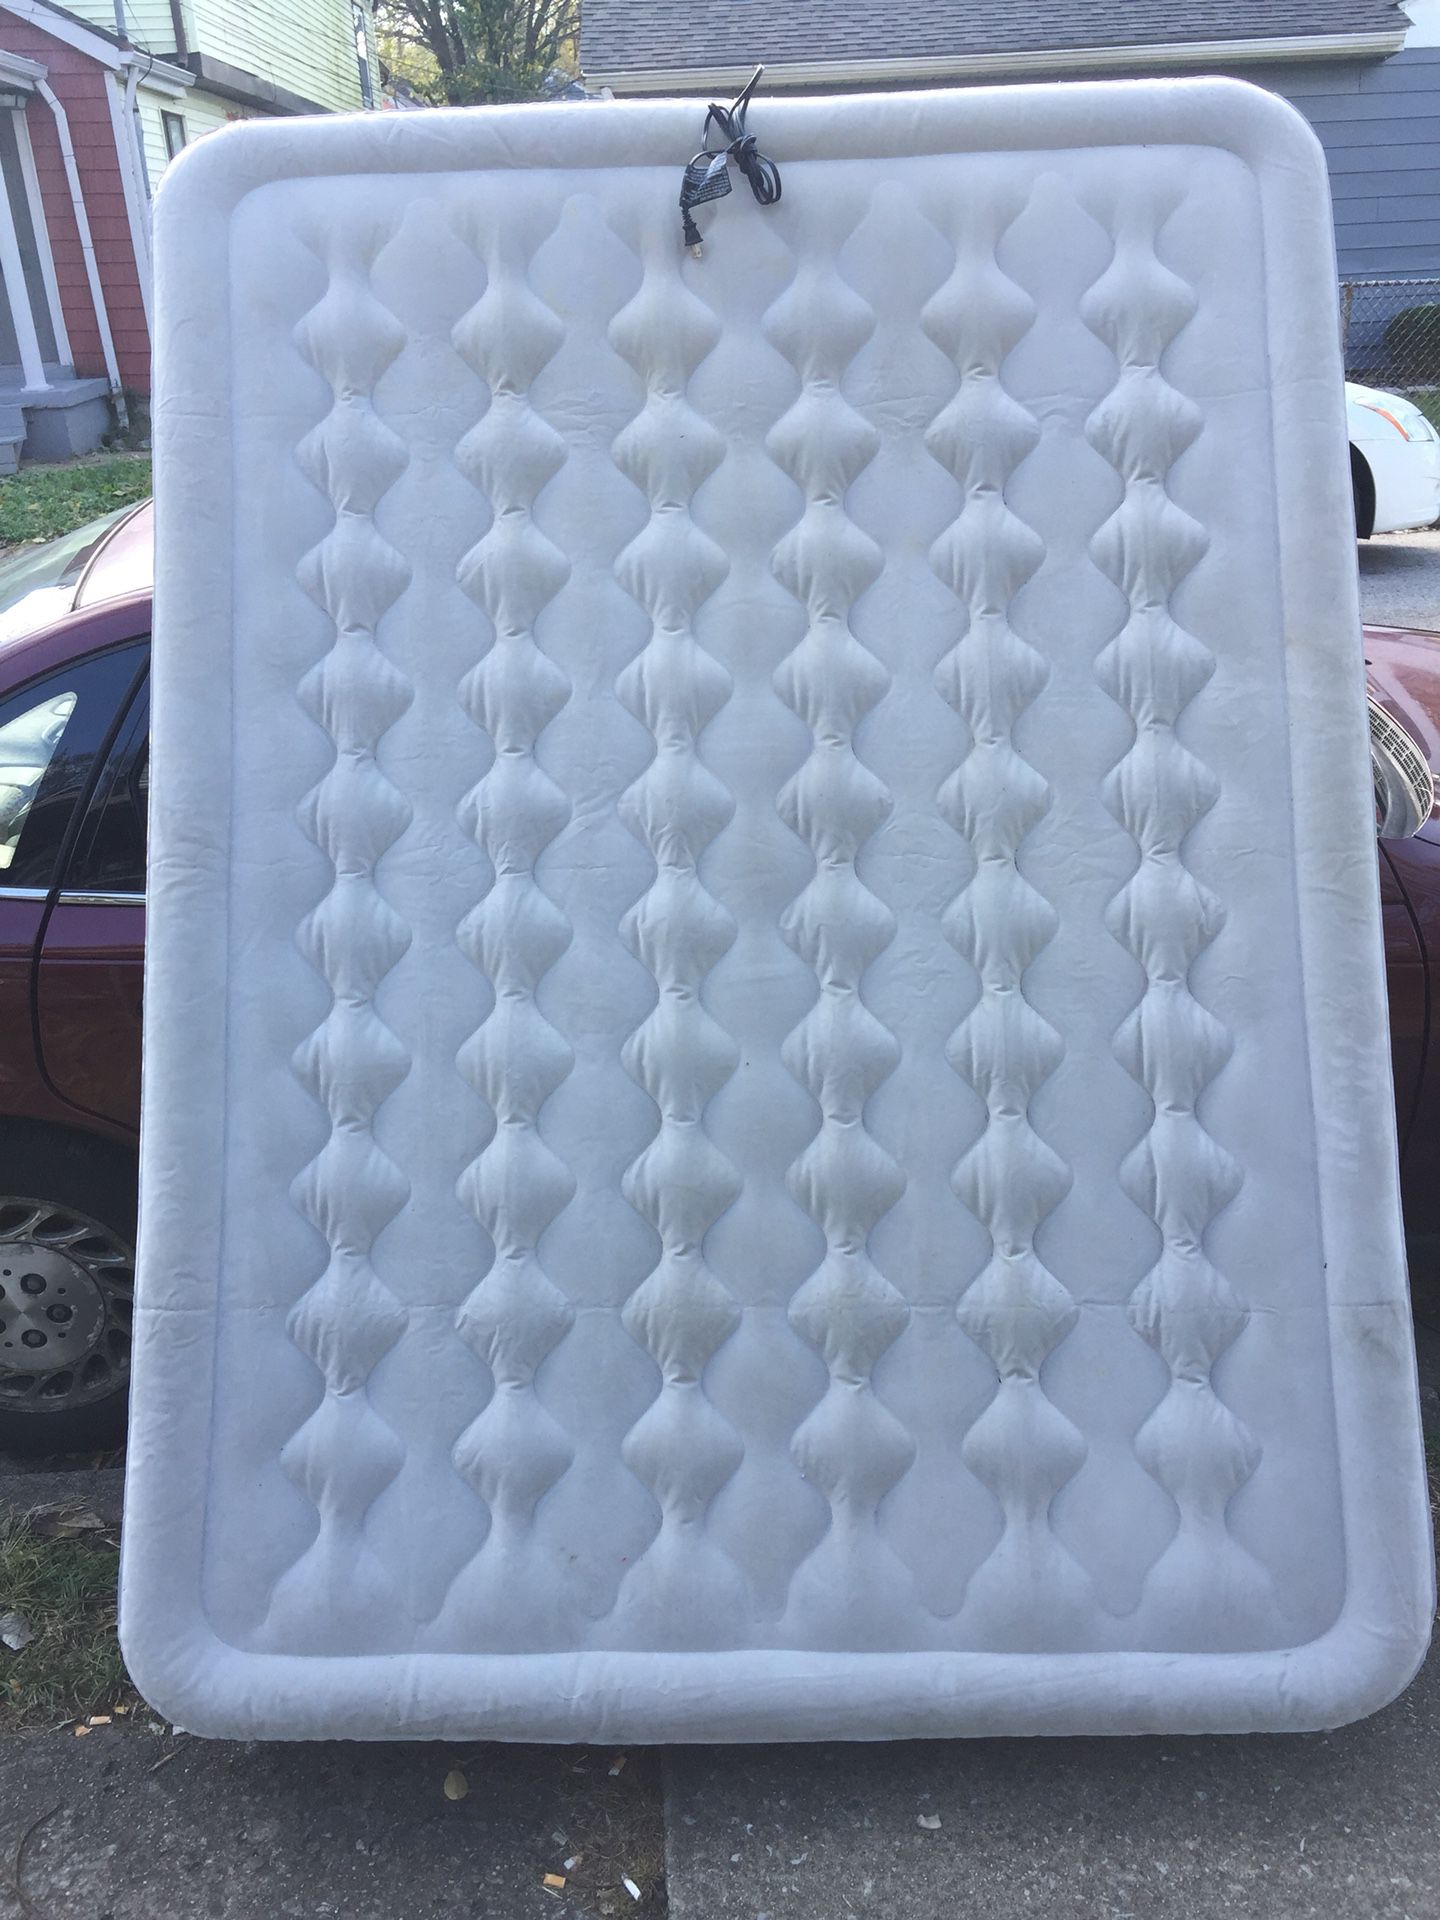 Full size air mattress